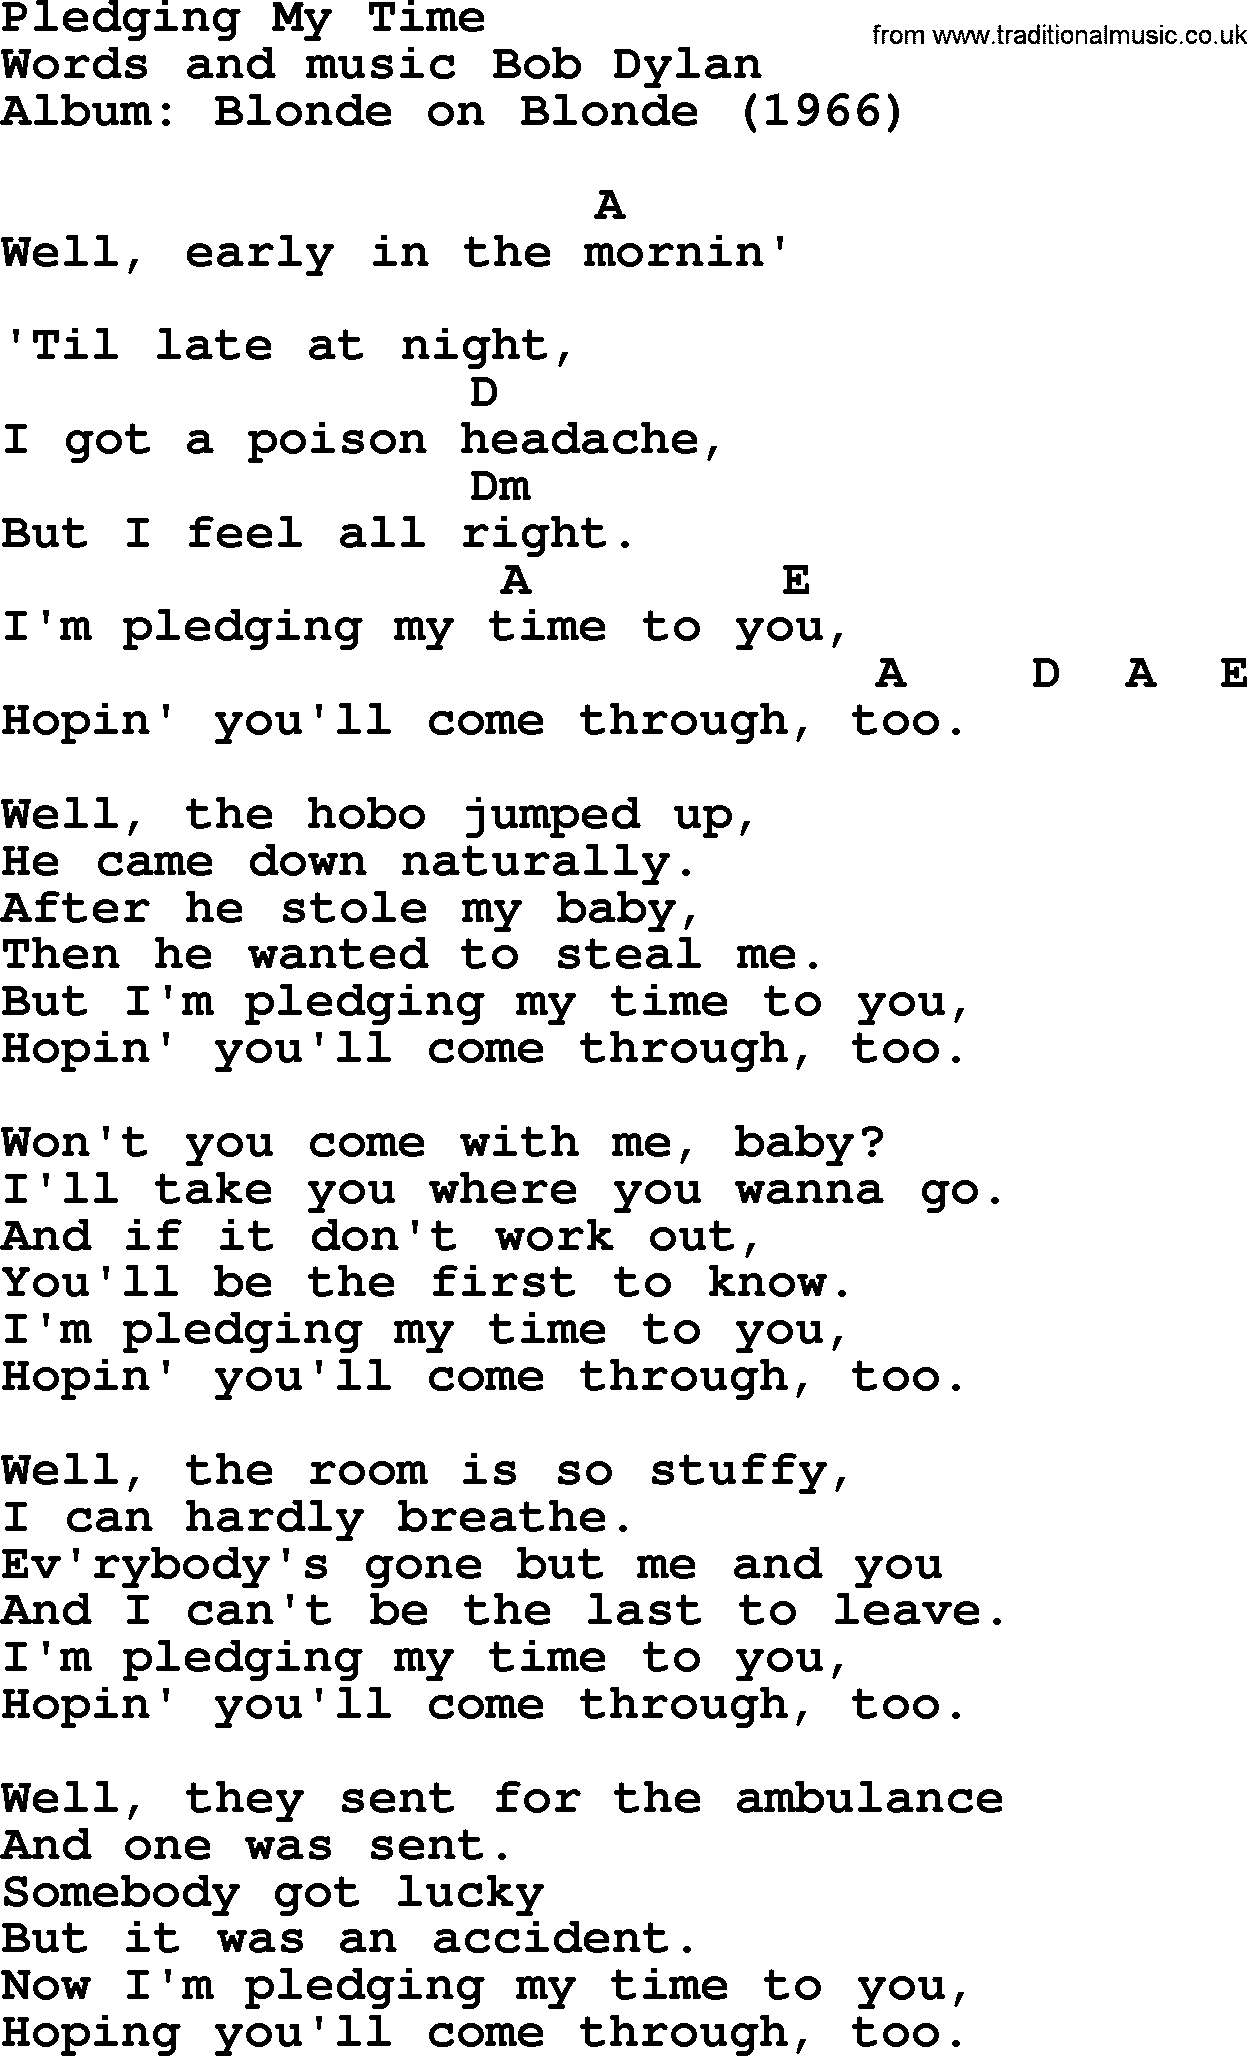 Bob Dylan song, lyrics with chords - Pledging My Time